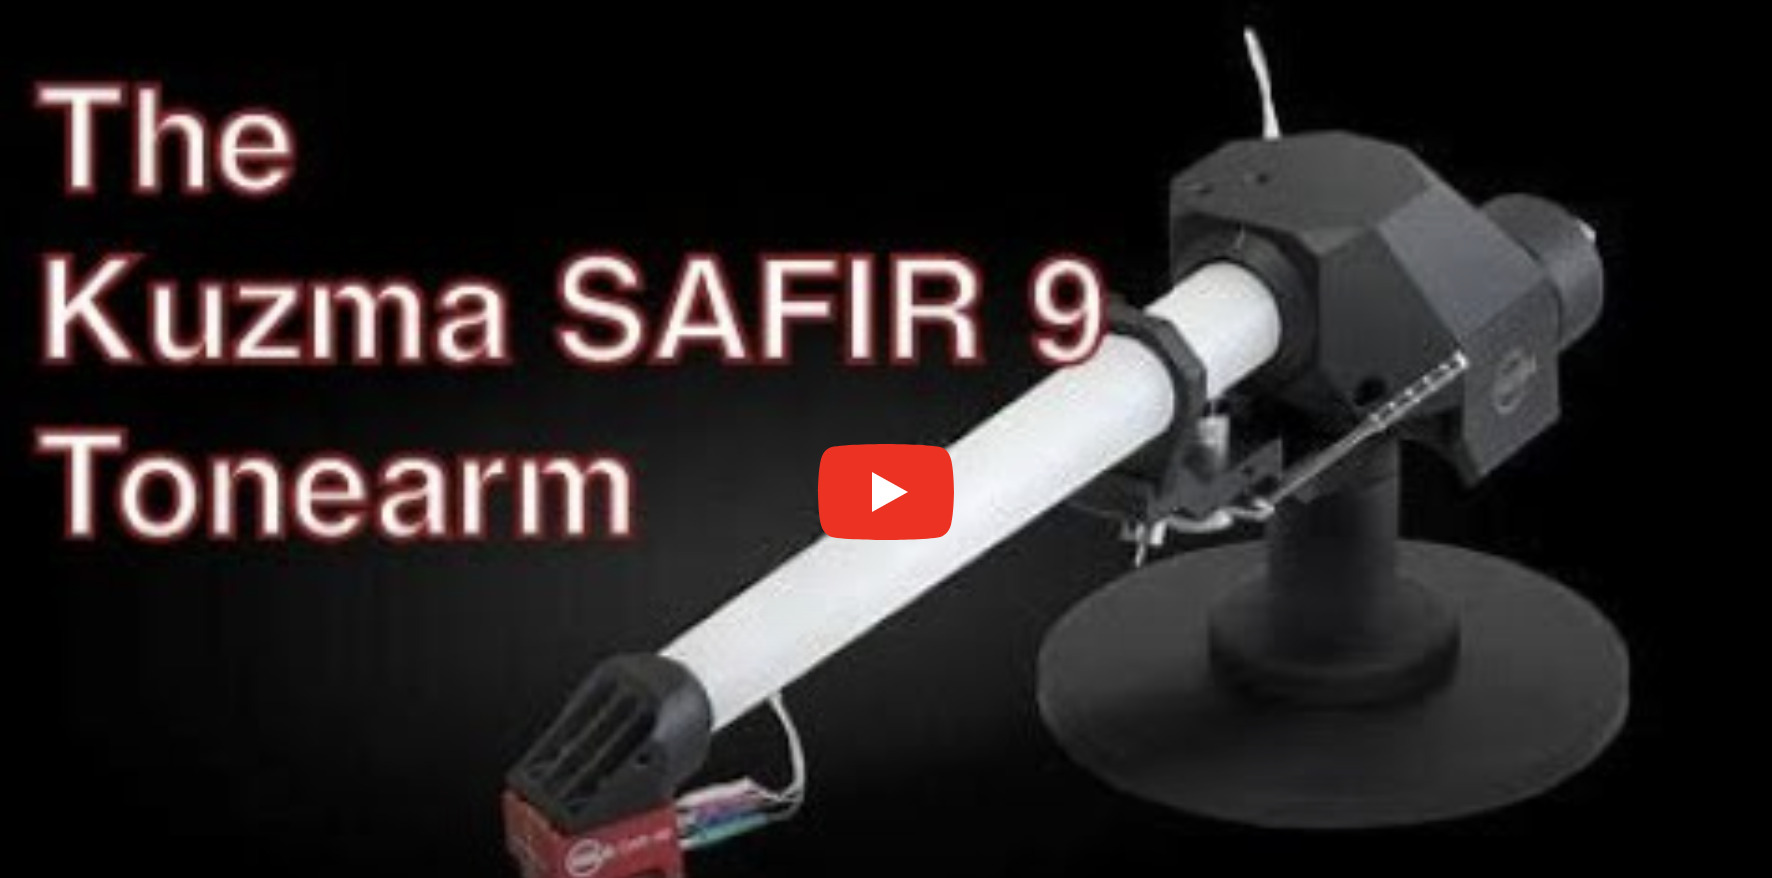 The NEW Kuzma SAFIR 9 Tonearm Preview | Michael Fremer Reports